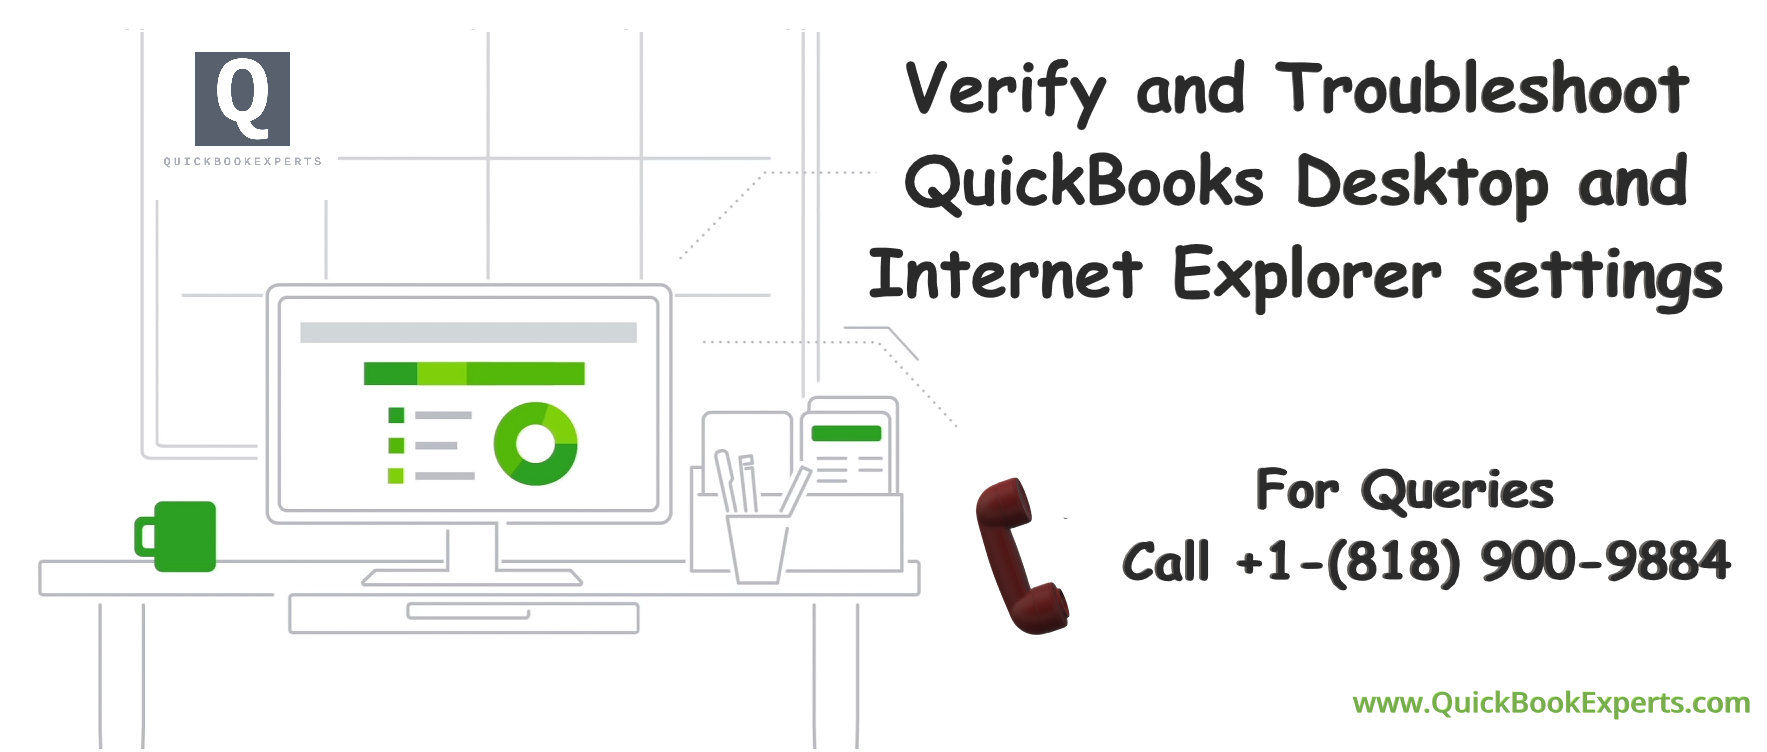 Verify and Troubleshoot QuickBooks Desktop and Internet Explorer settings